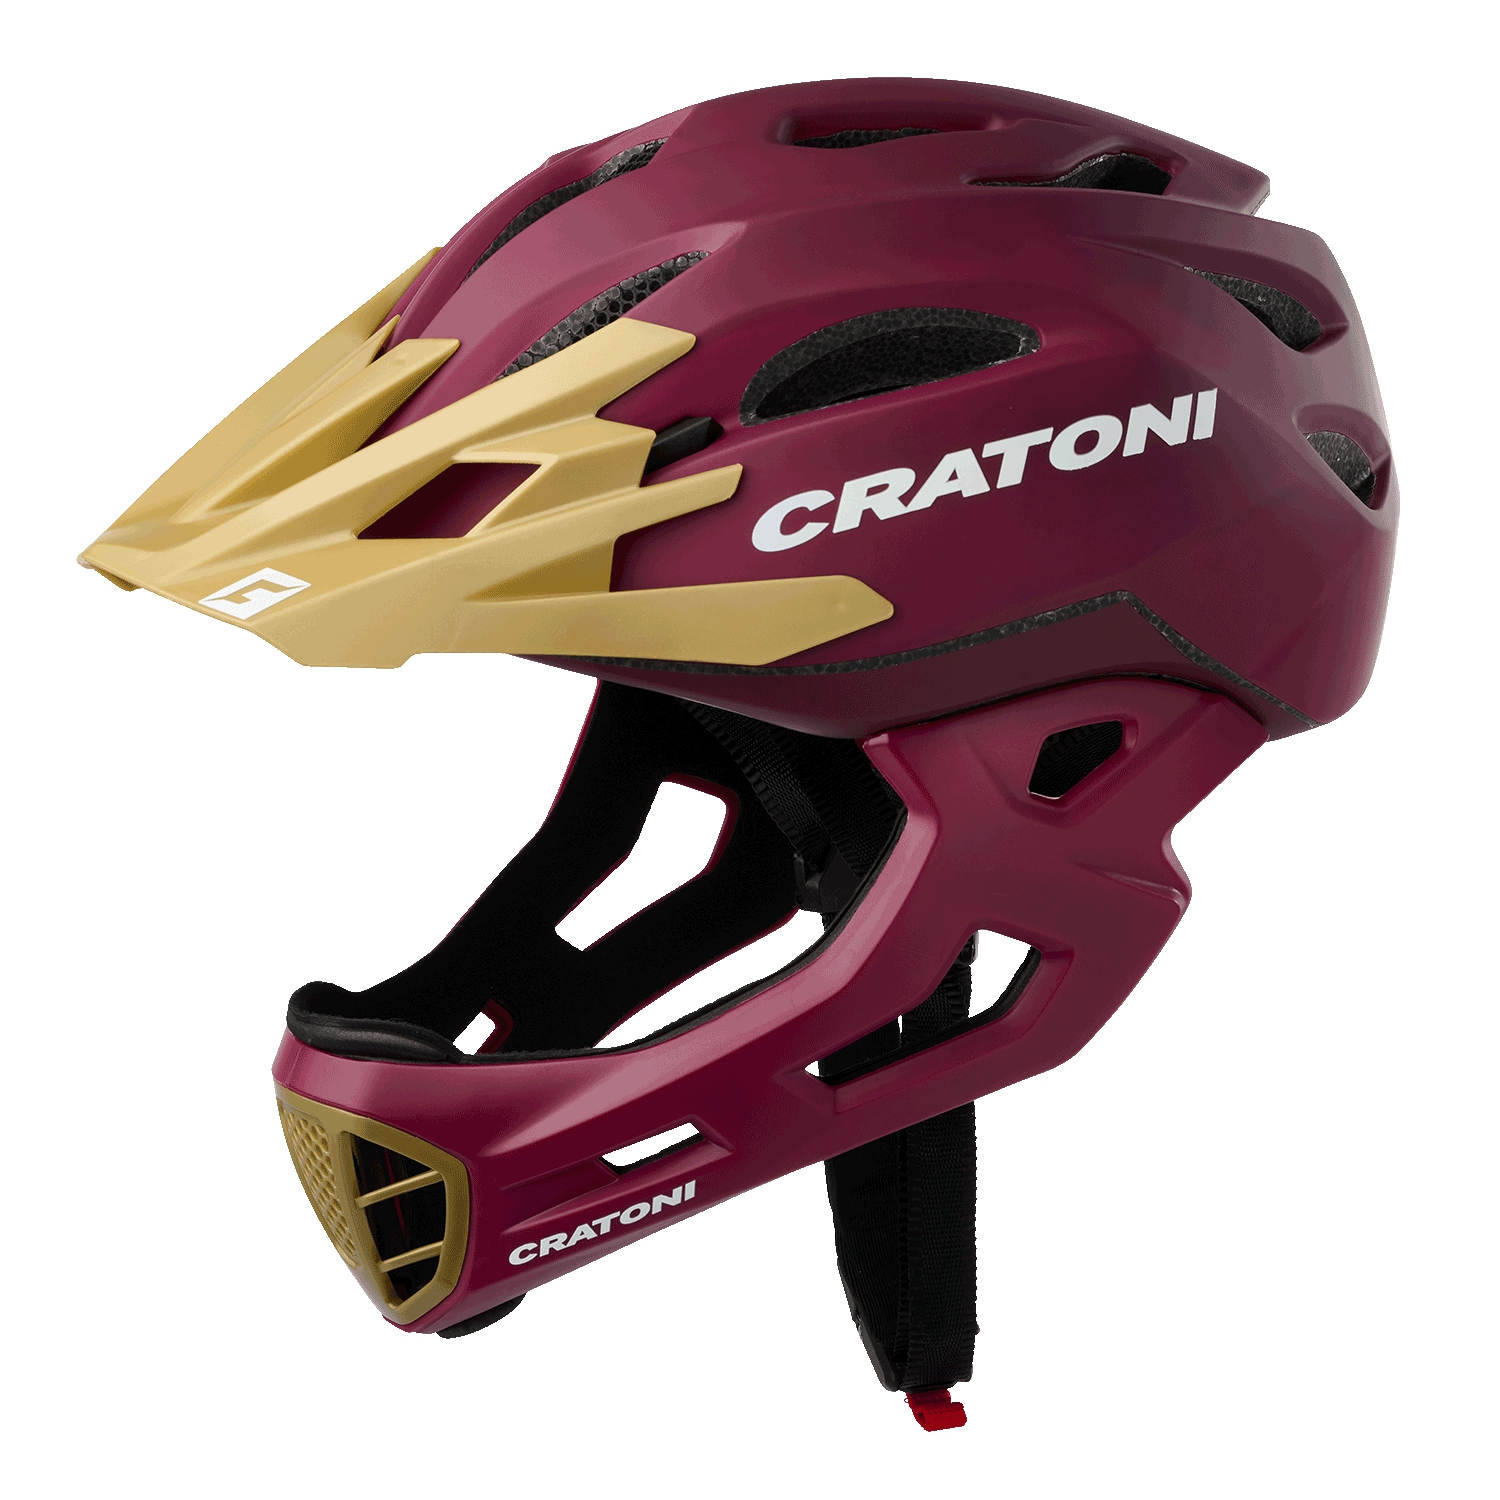 C-Maniac Freeride off-road mountain bike helmet in beige and burgundy colour combo